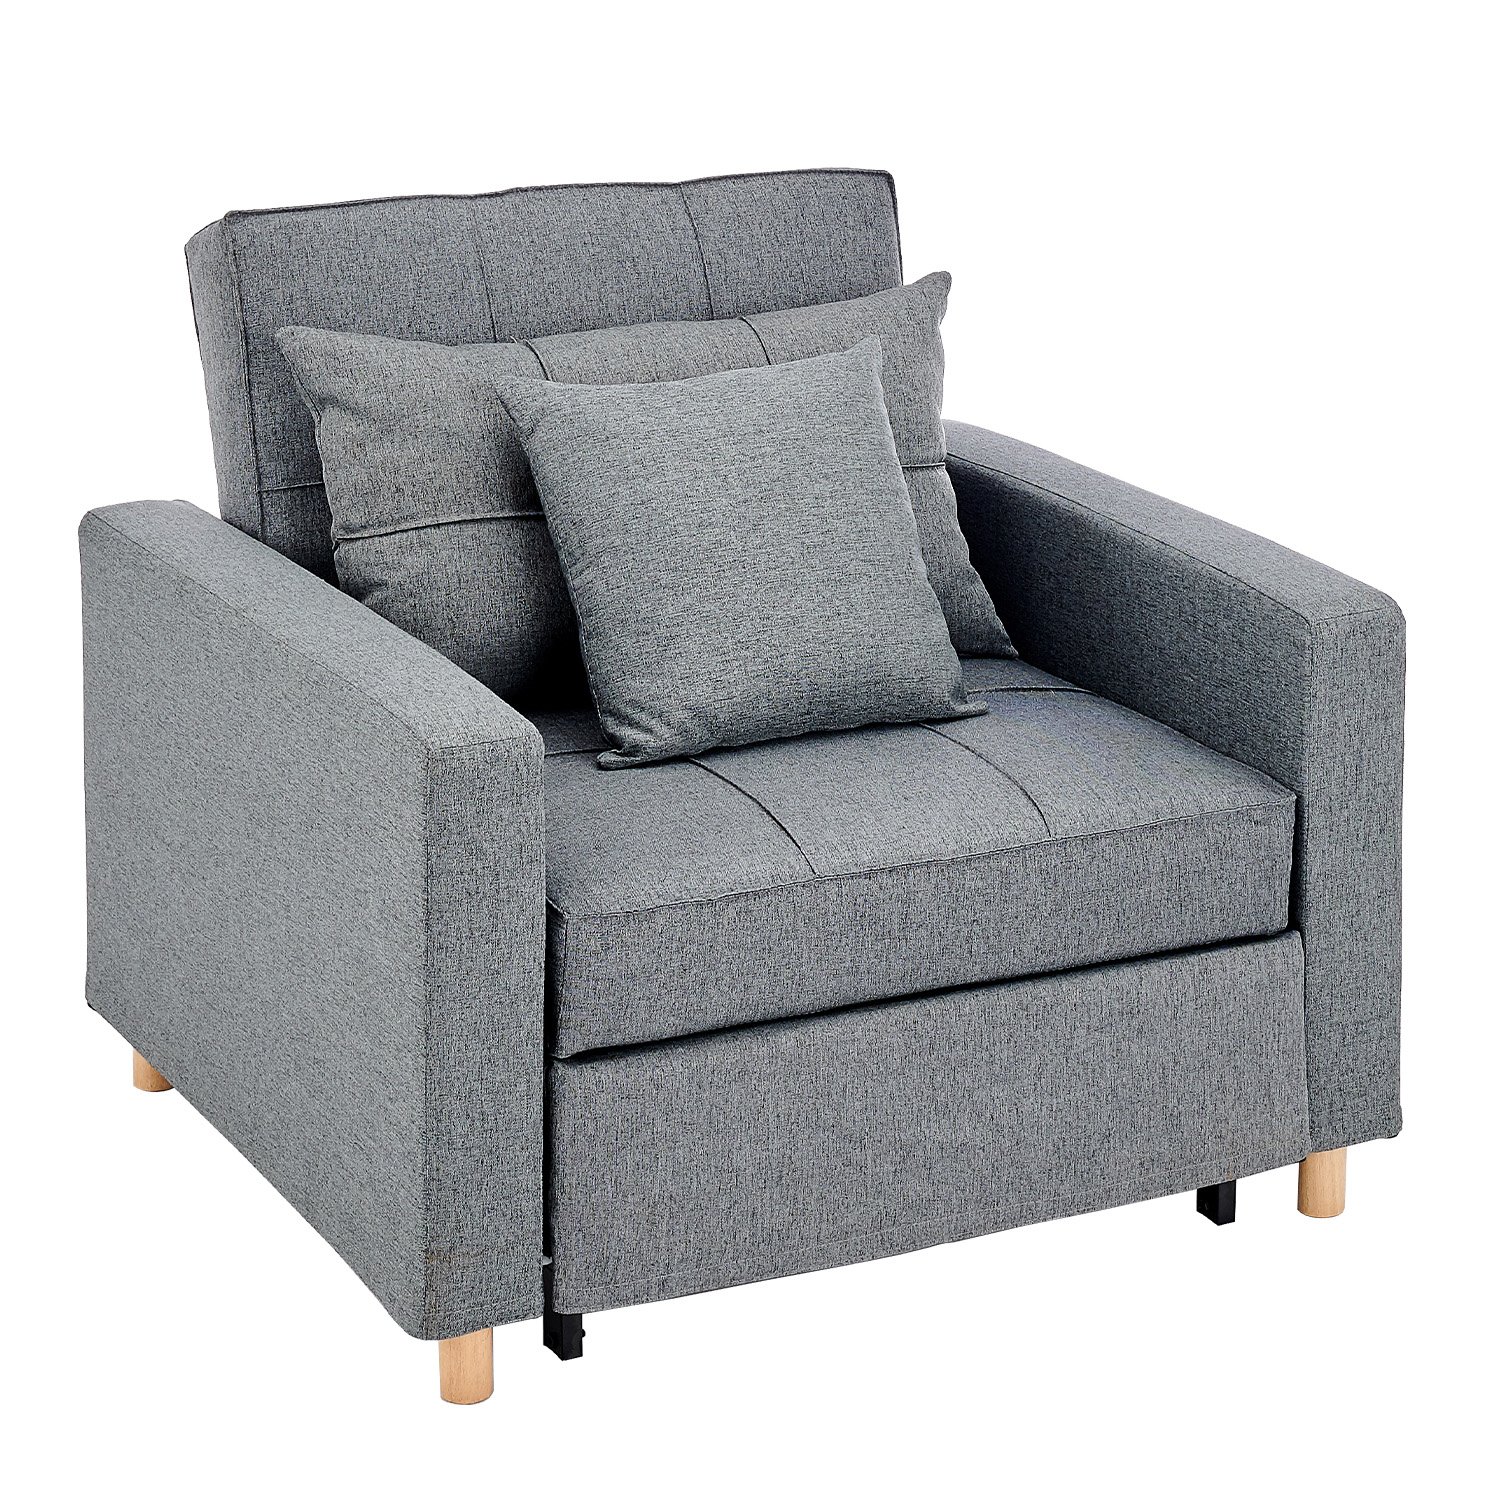 Suri 3-in-1 Convertible Sofa Chair Bed by Sarantino - Grey 1